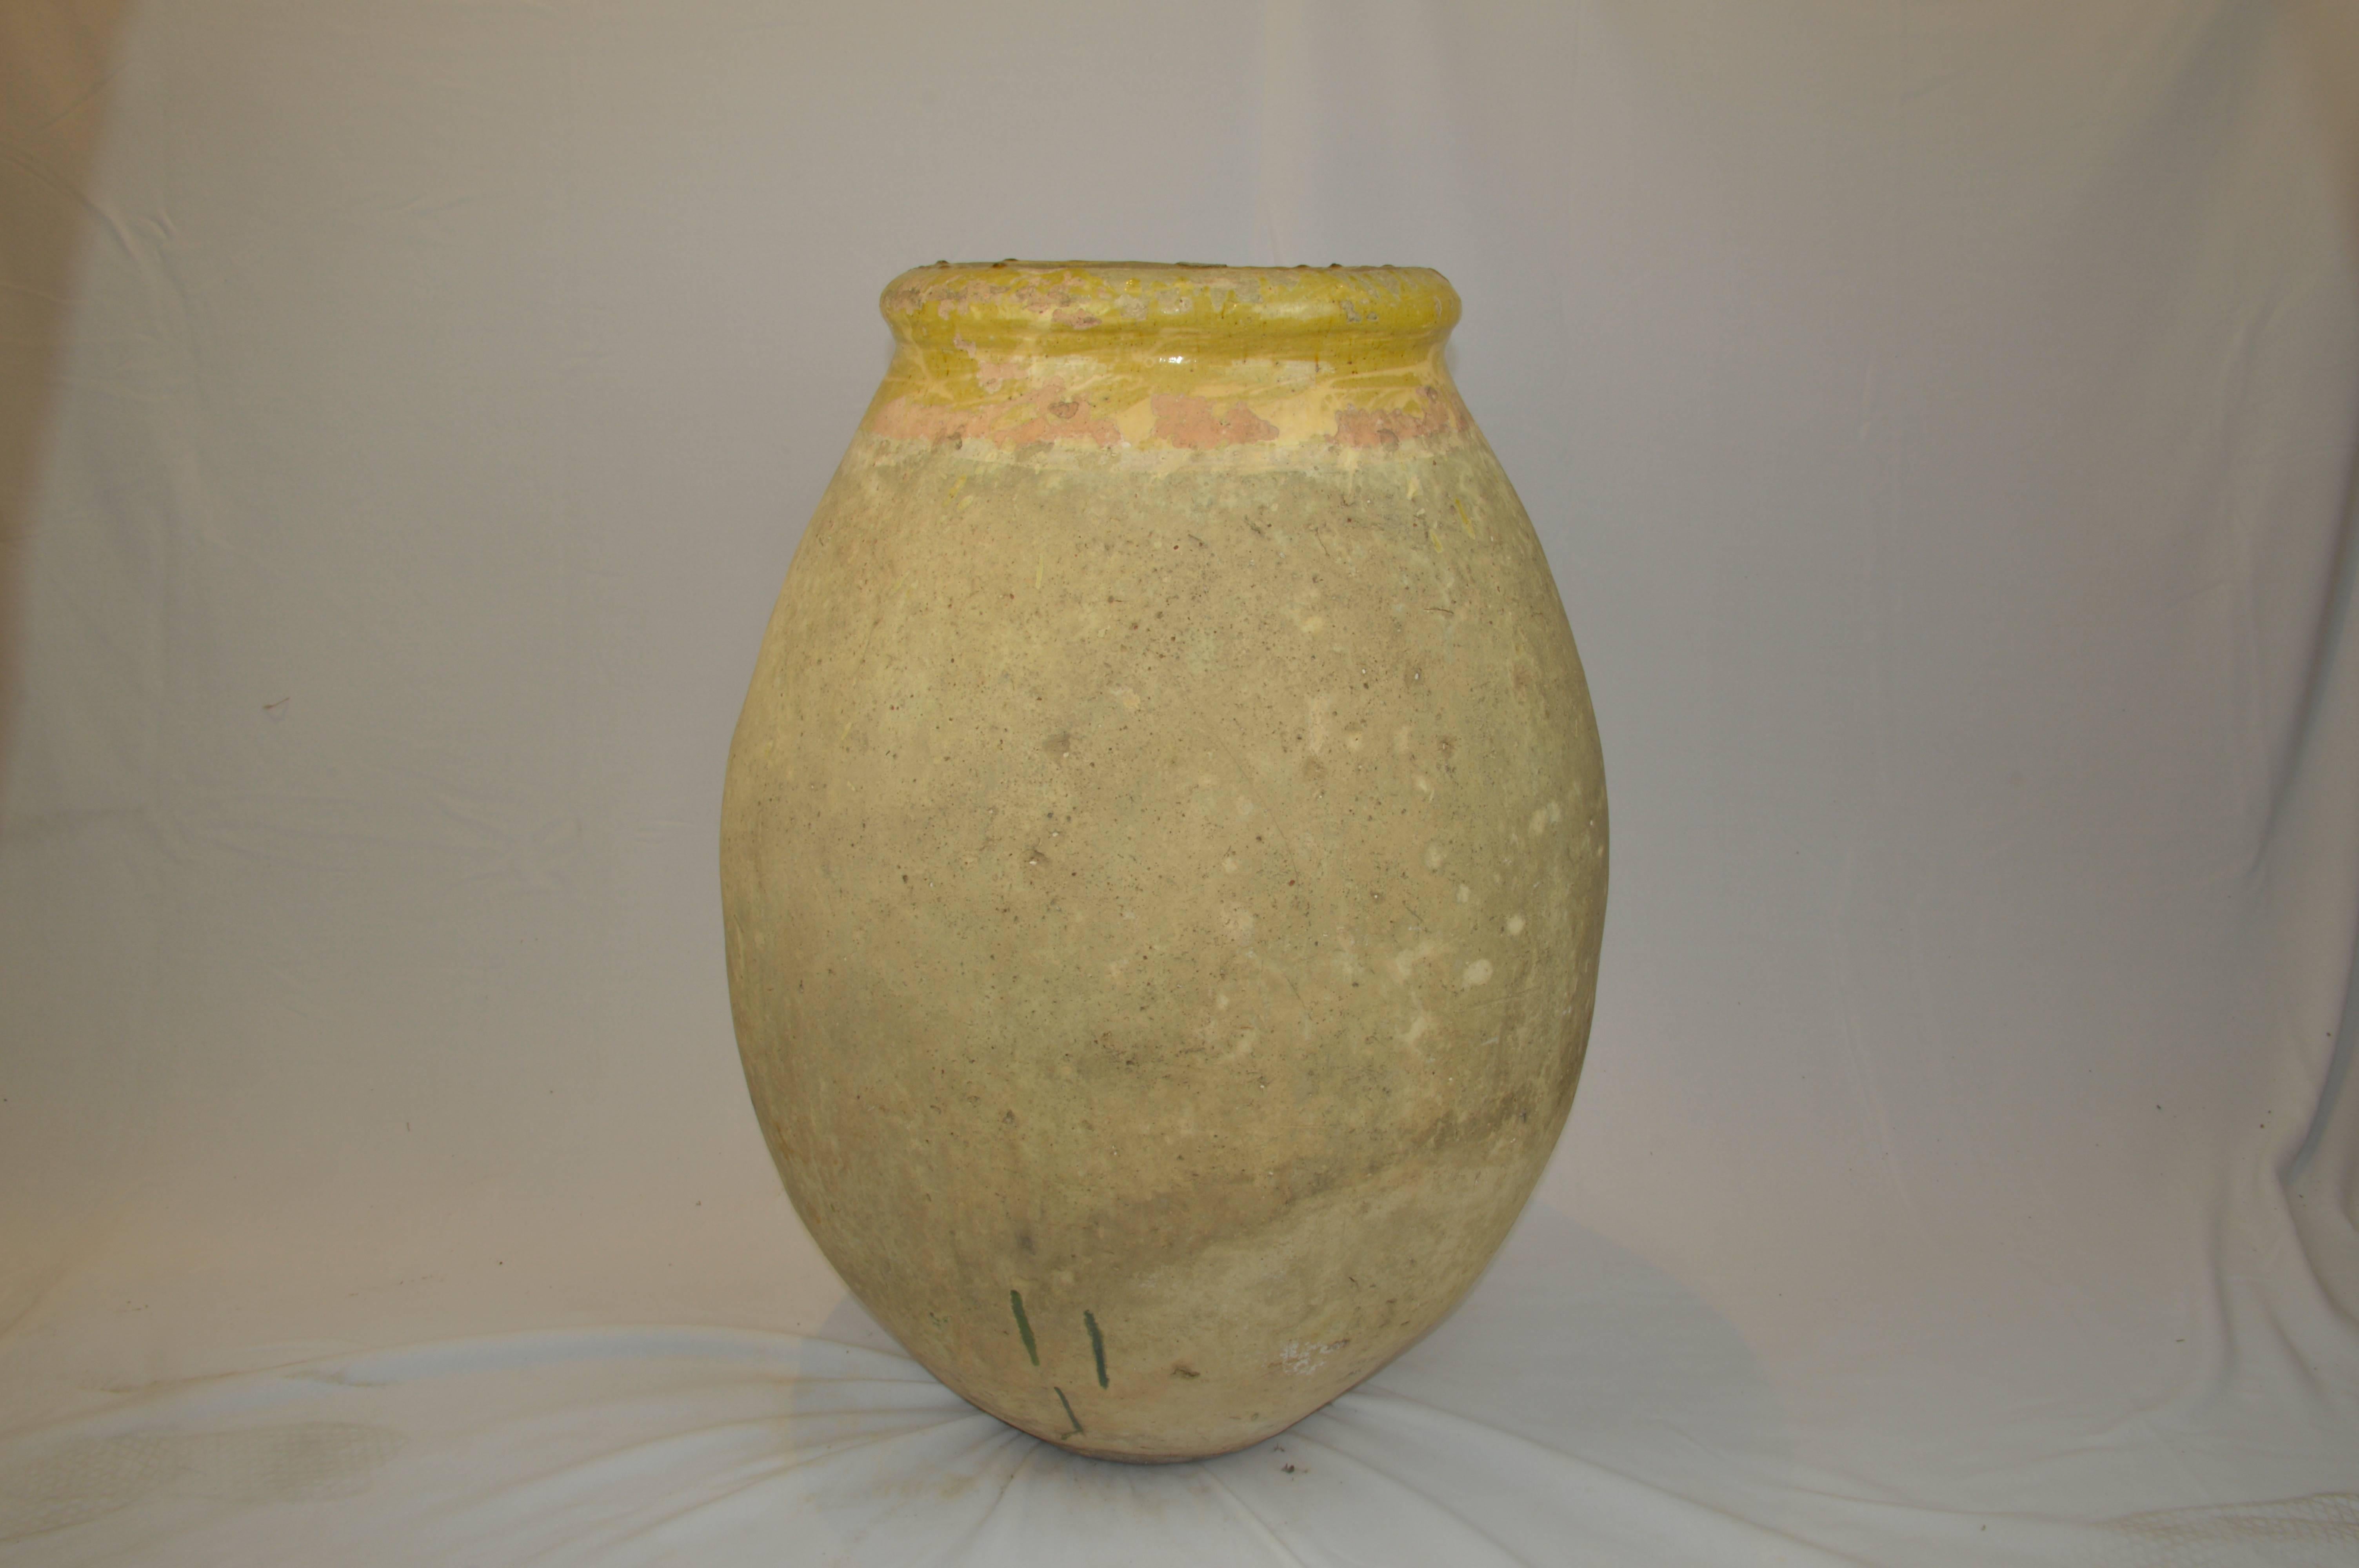 Antique French terracotta storage jar with yellow glazed rim from Biot.